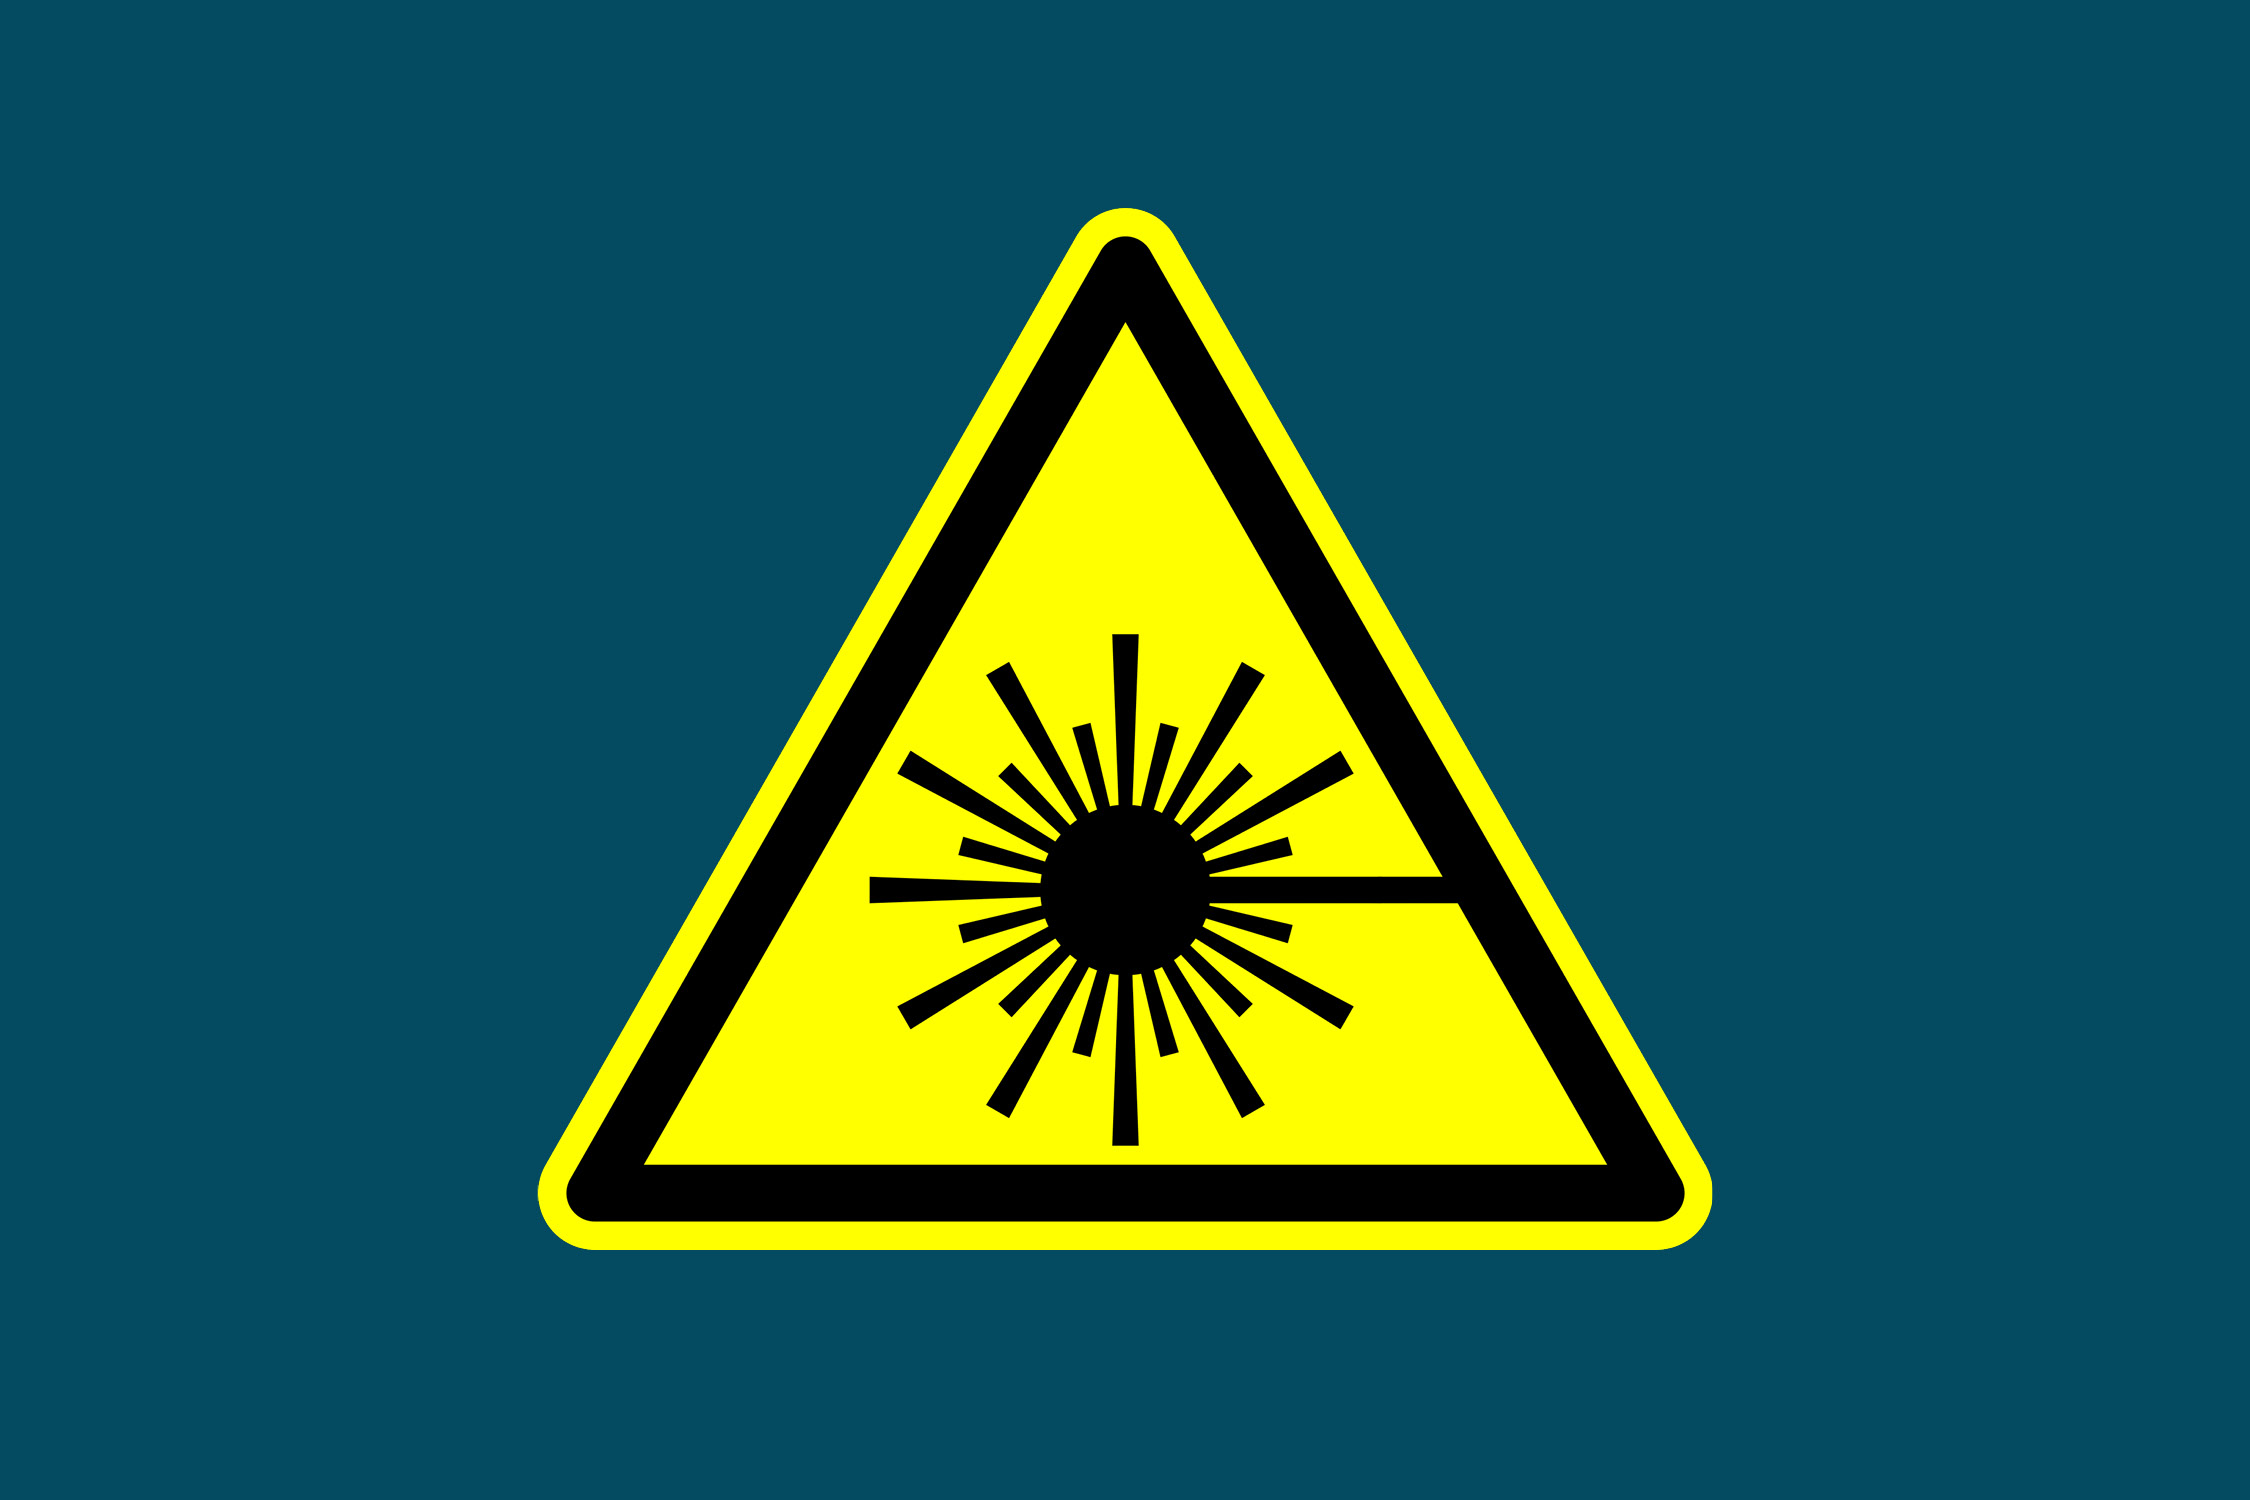 Laser warning symbol